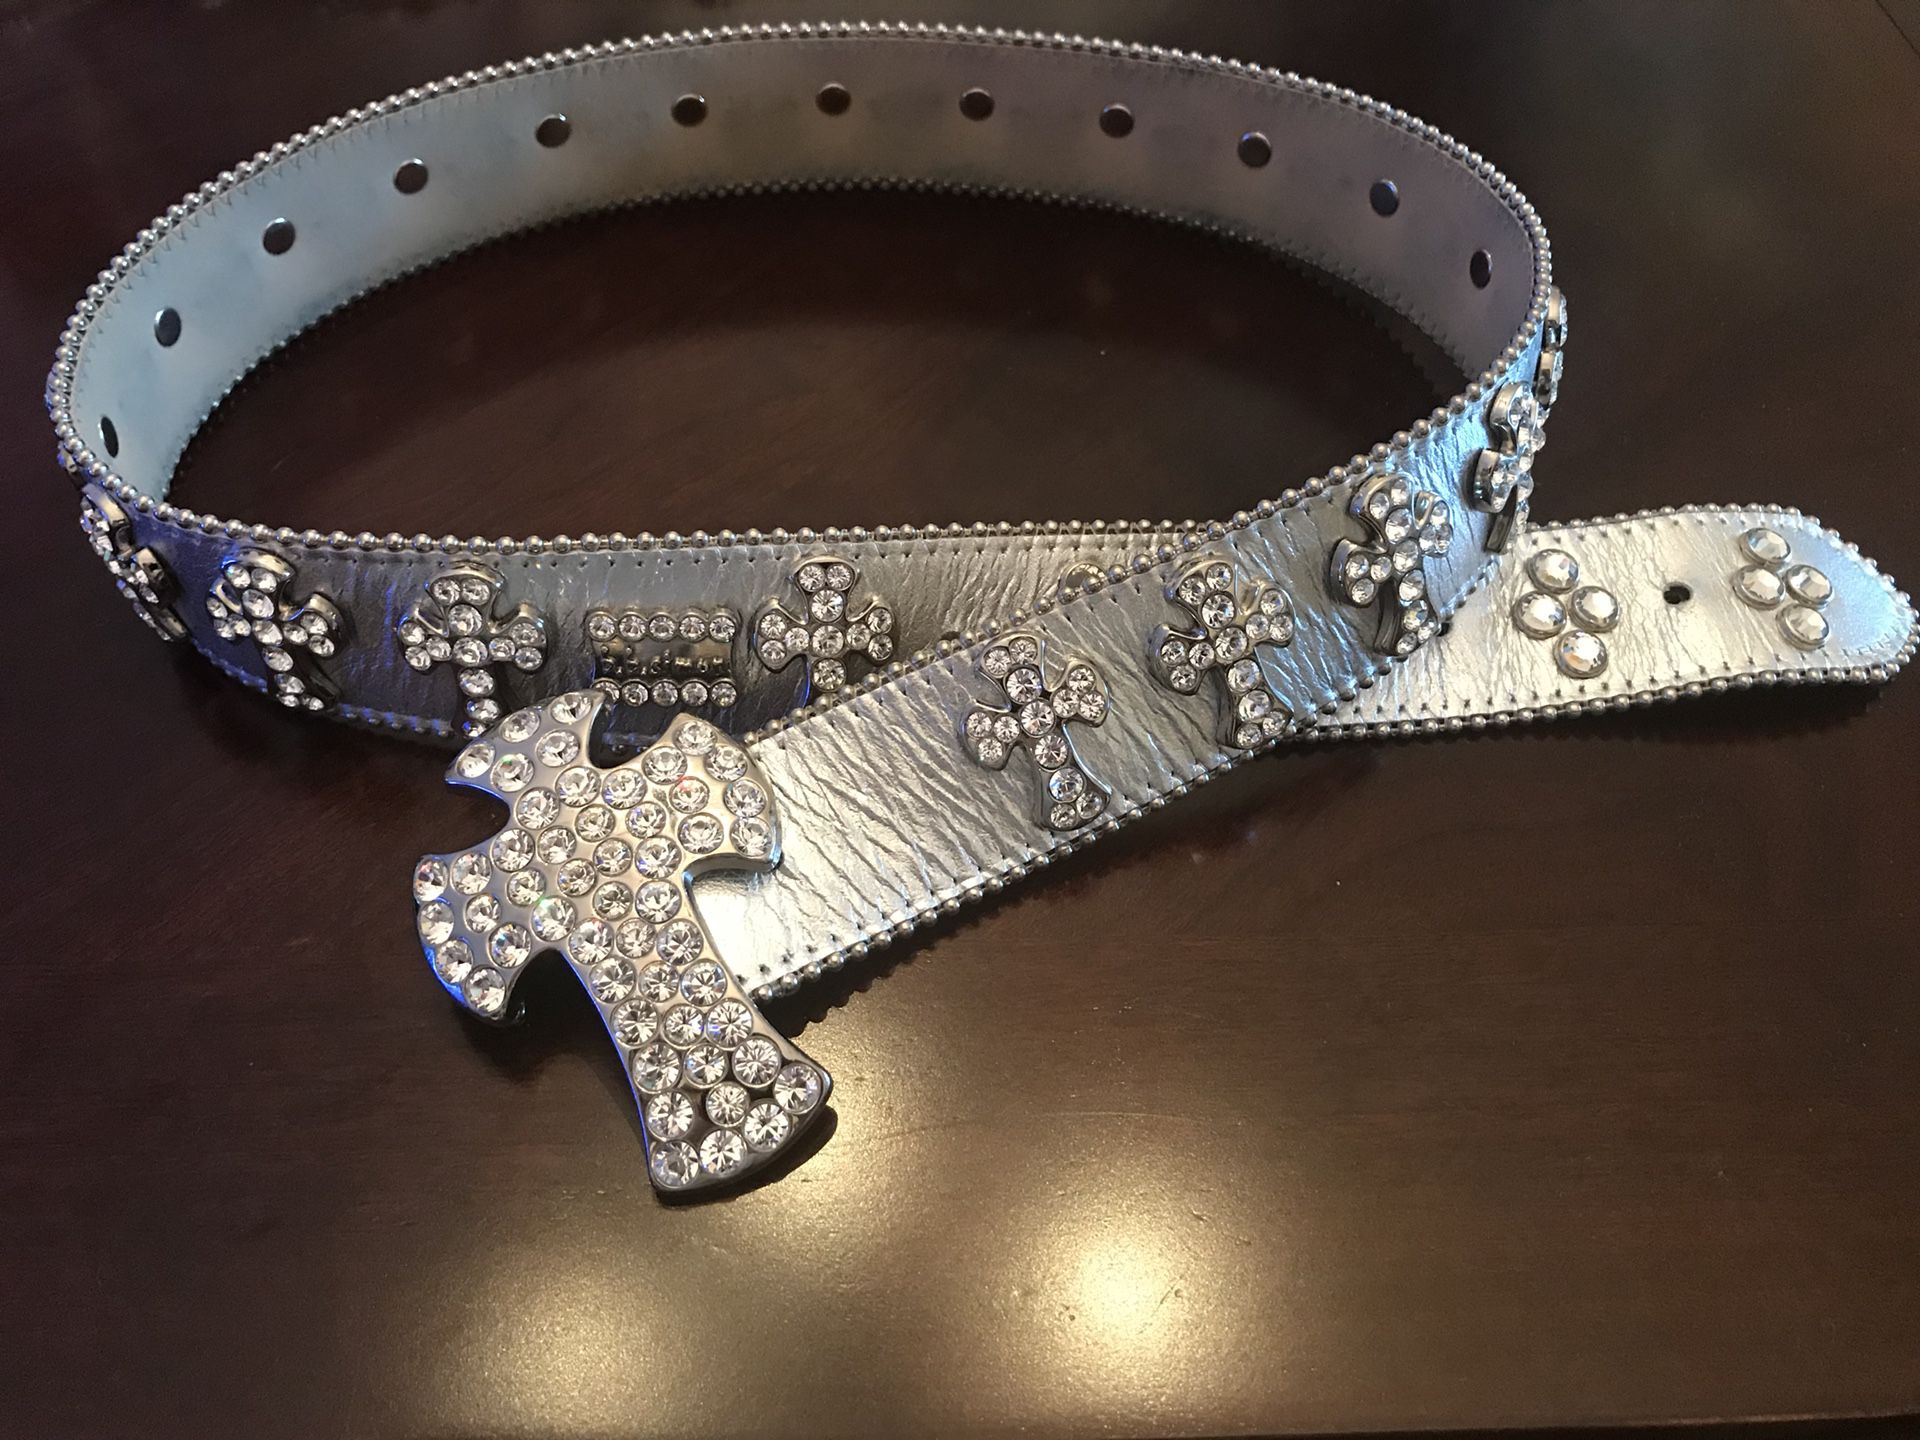 og bb simon silver belt for Sale in Tampa, FL - OfferUp